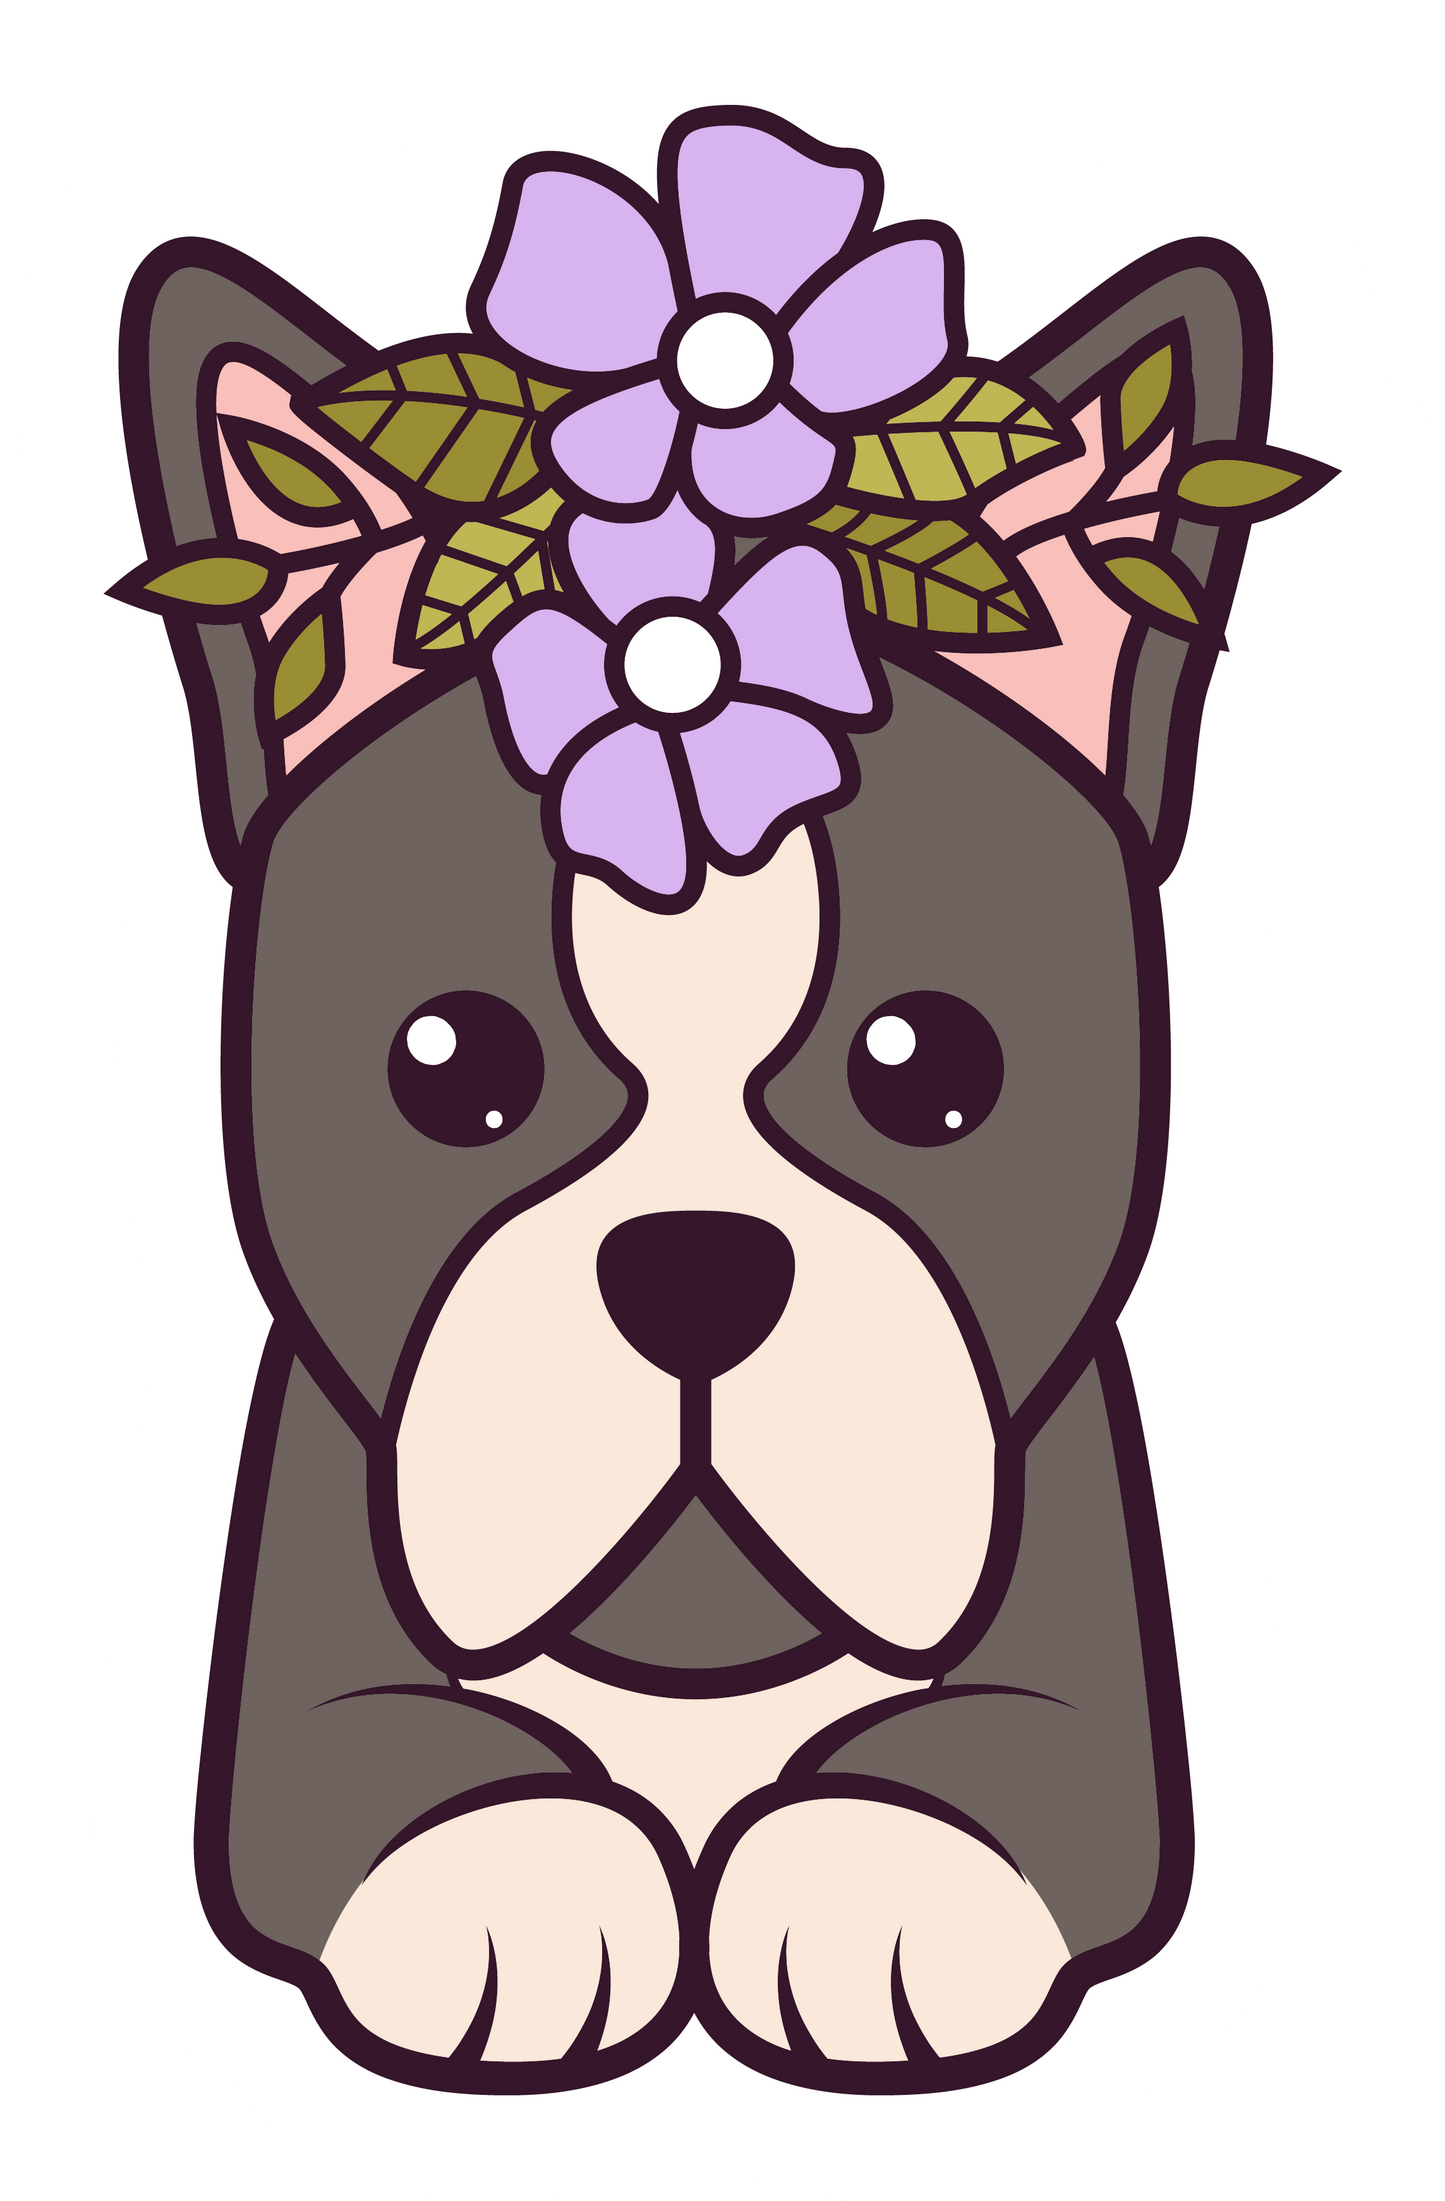 Stickers - Cartoon Boston Terrier